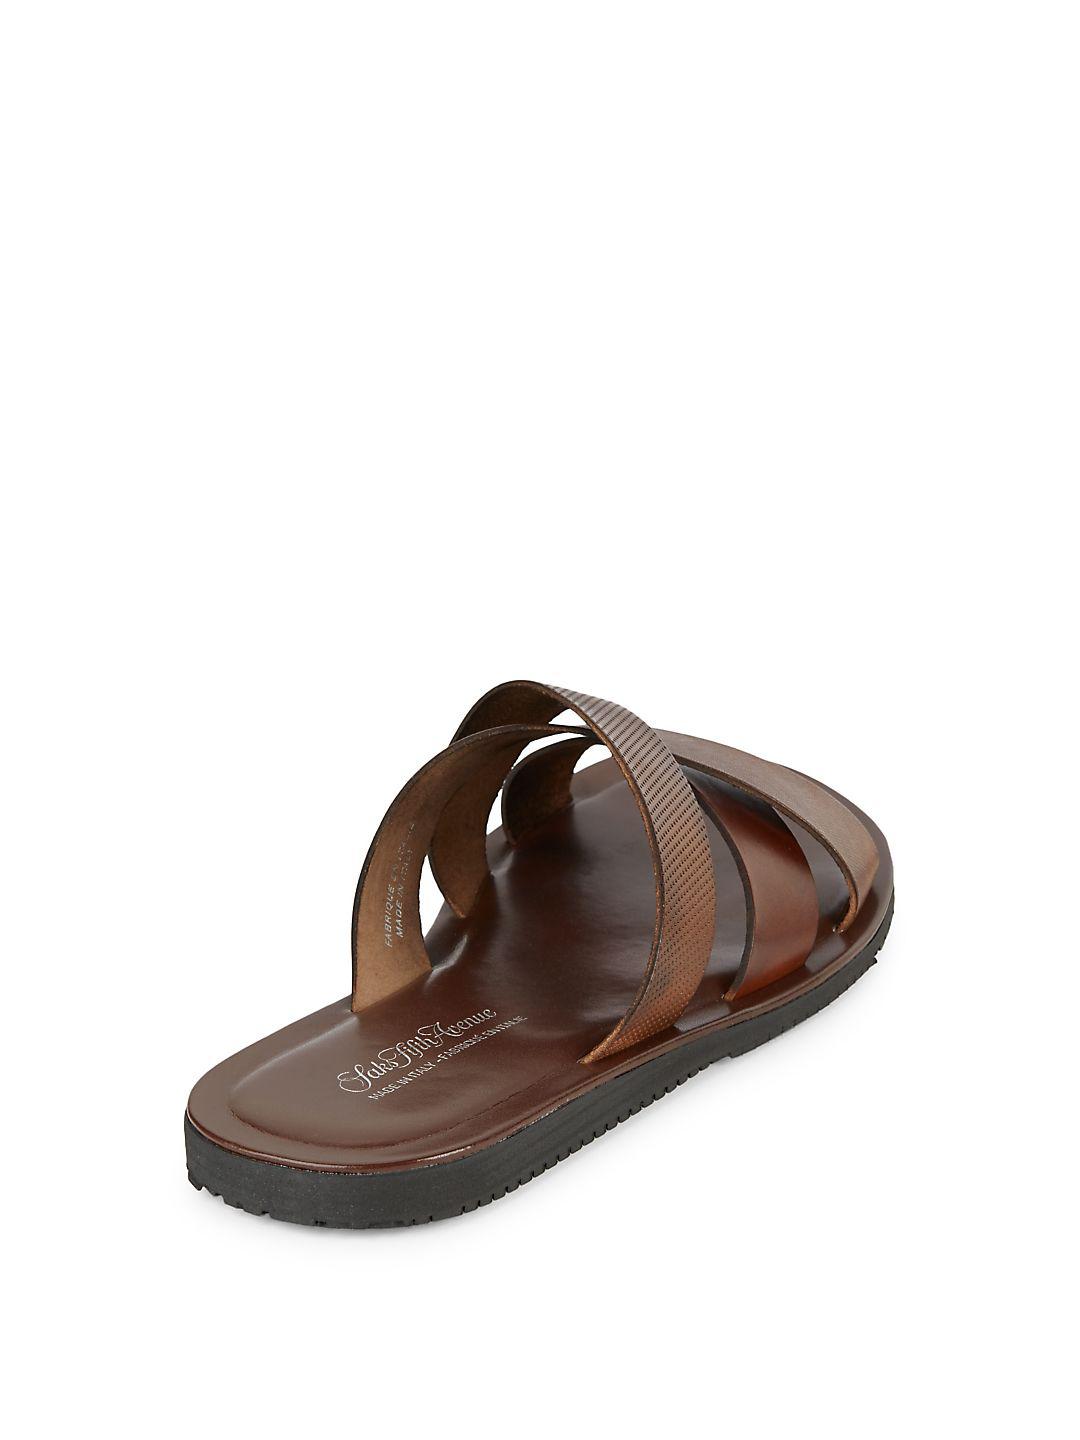 Women's Syrenia Sorrento Italian Leather Sandals MADE IN ITALY Thong Flats  8.5 | eBay